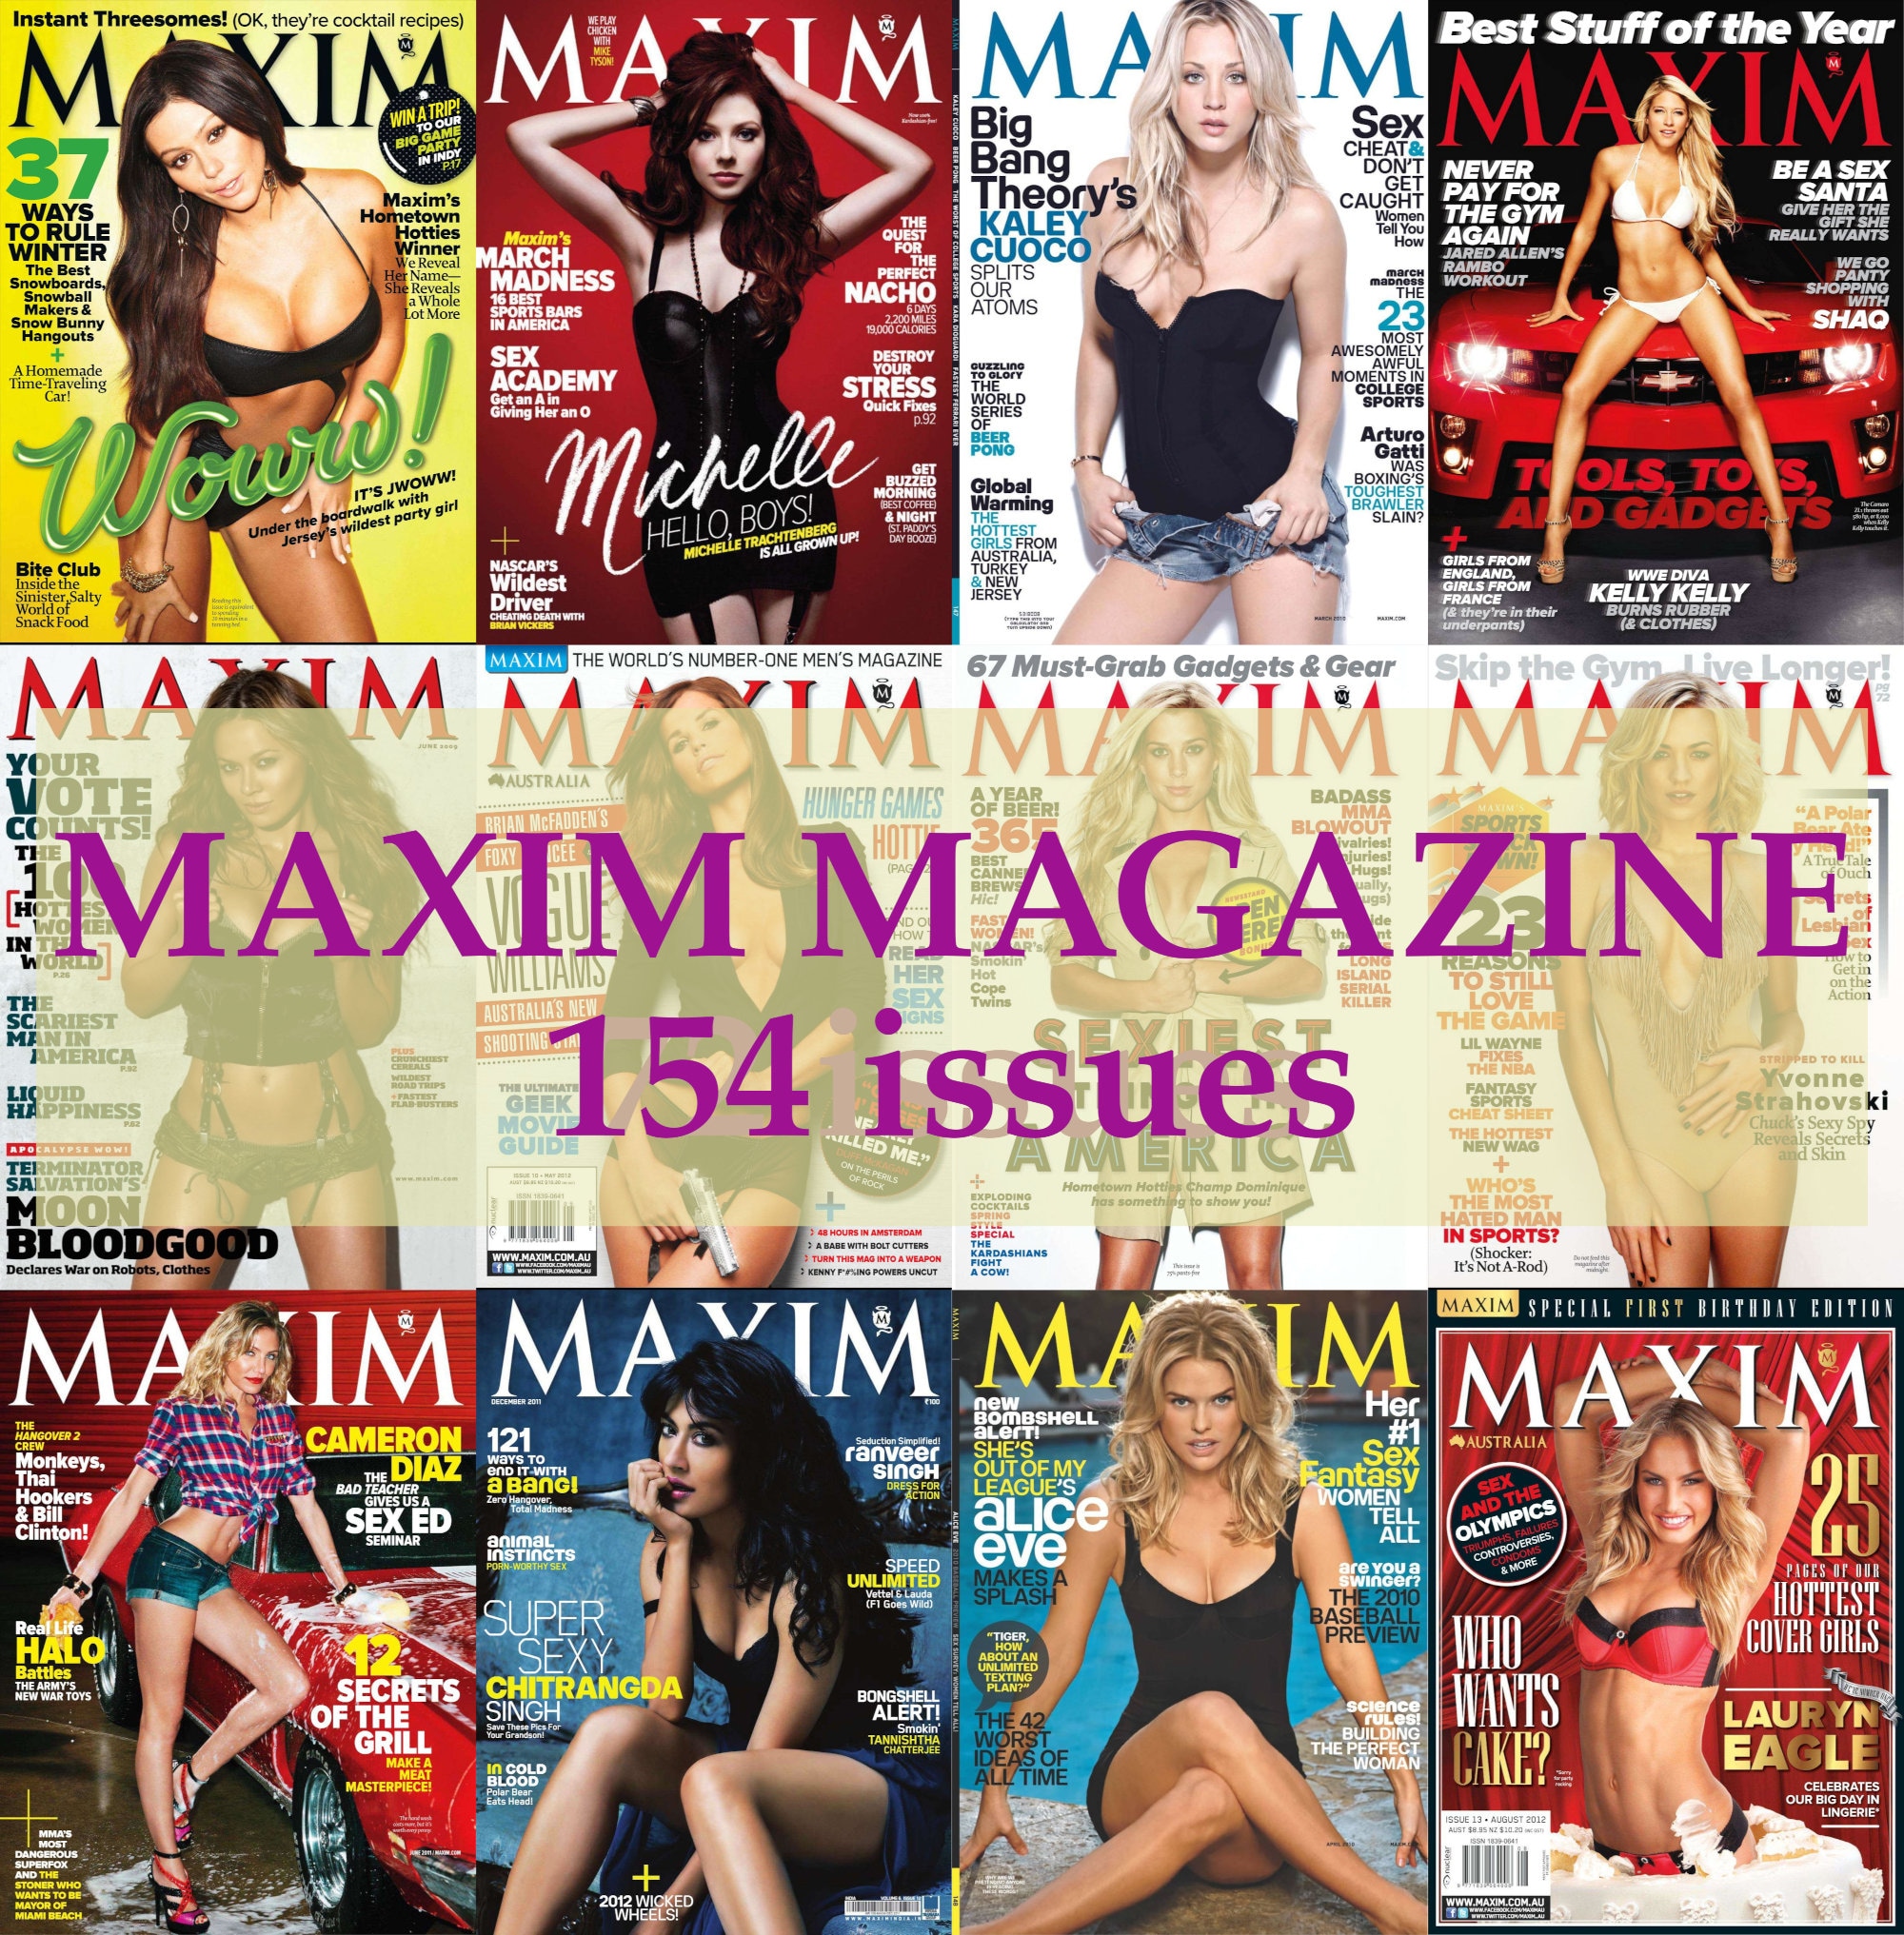 Maxim Magazine photo photo